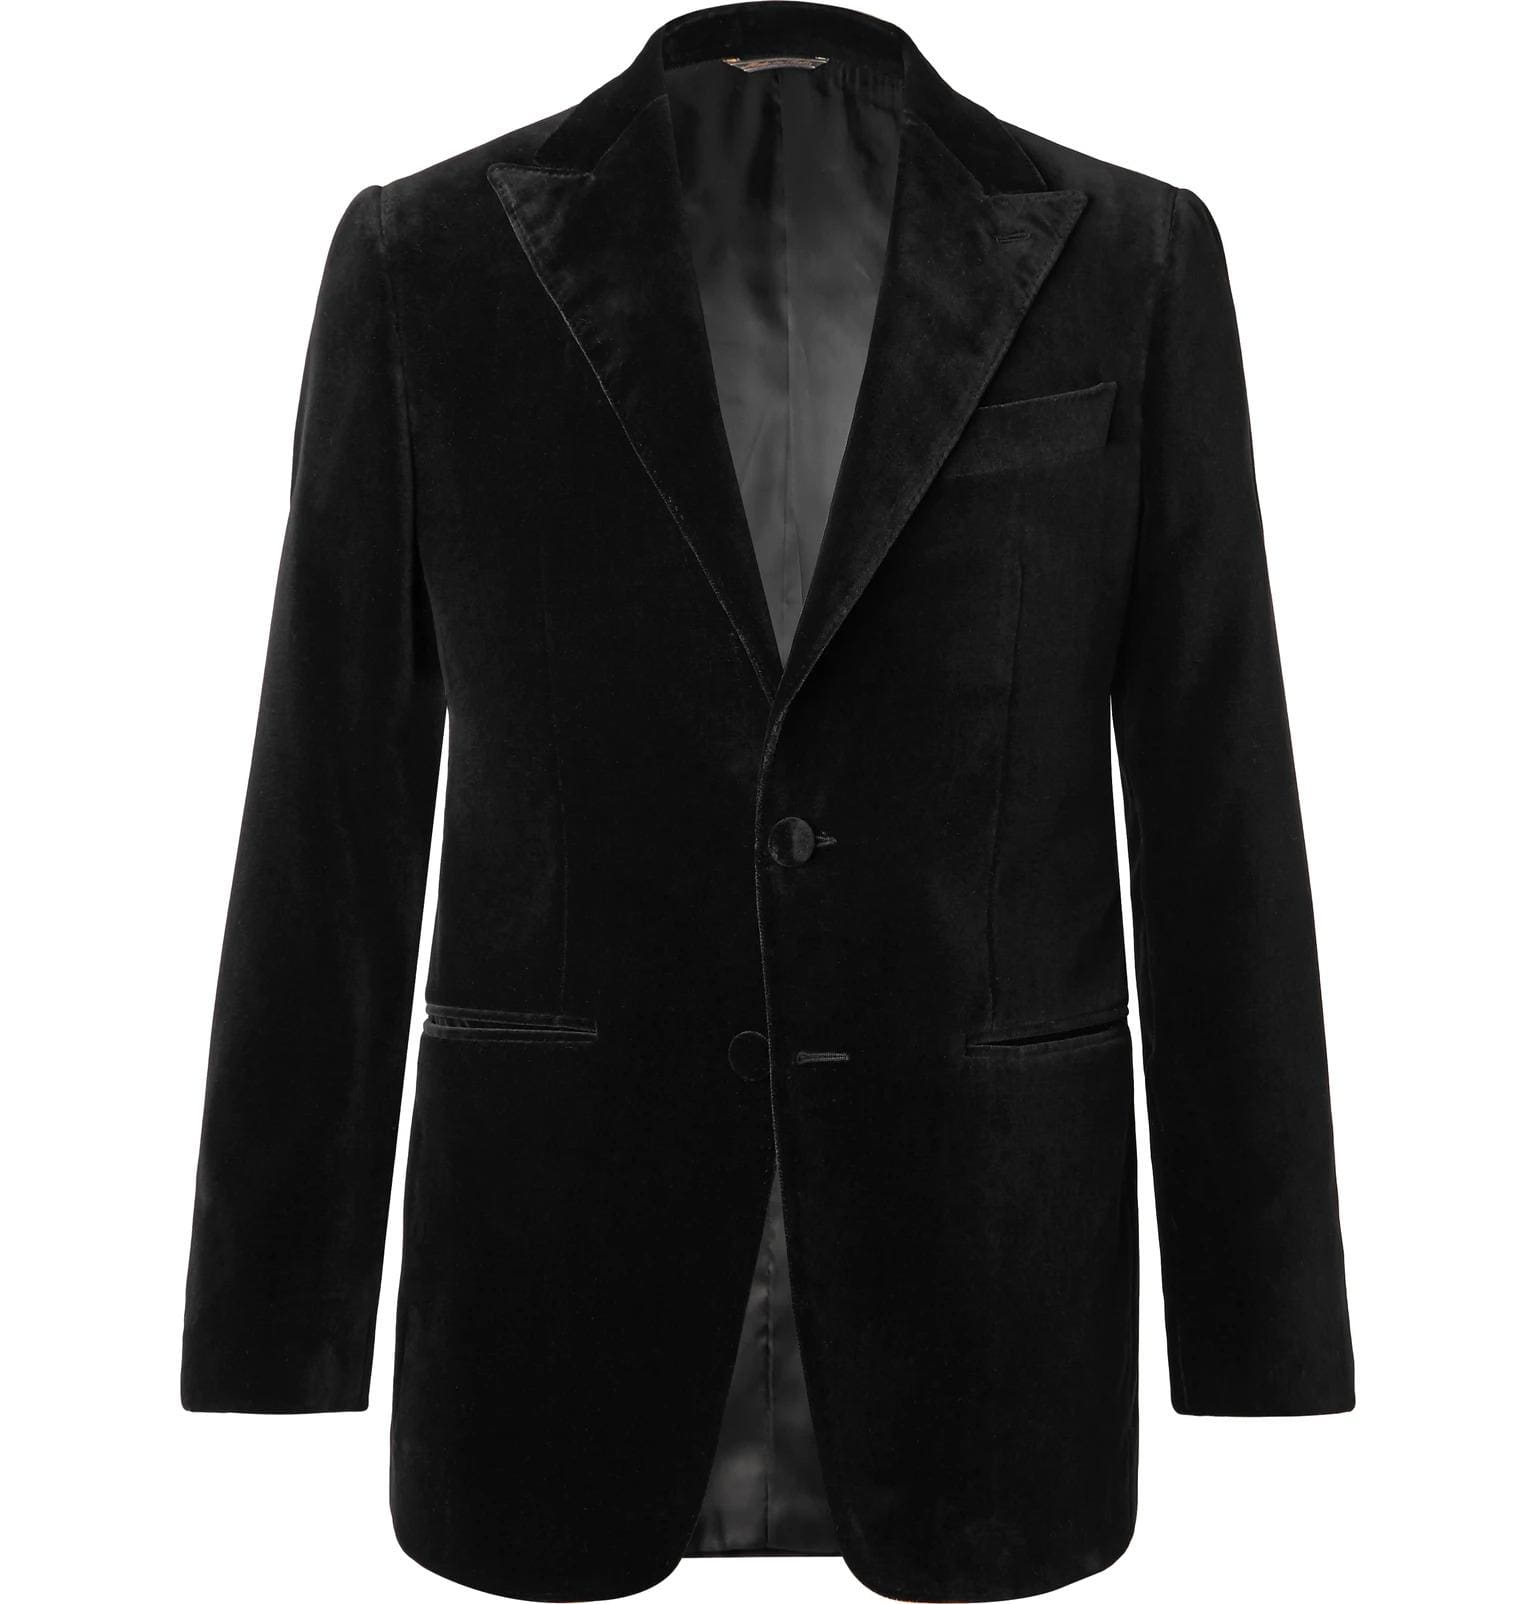 Back to black: your gentlemanly eveningwear edit – Luxury London